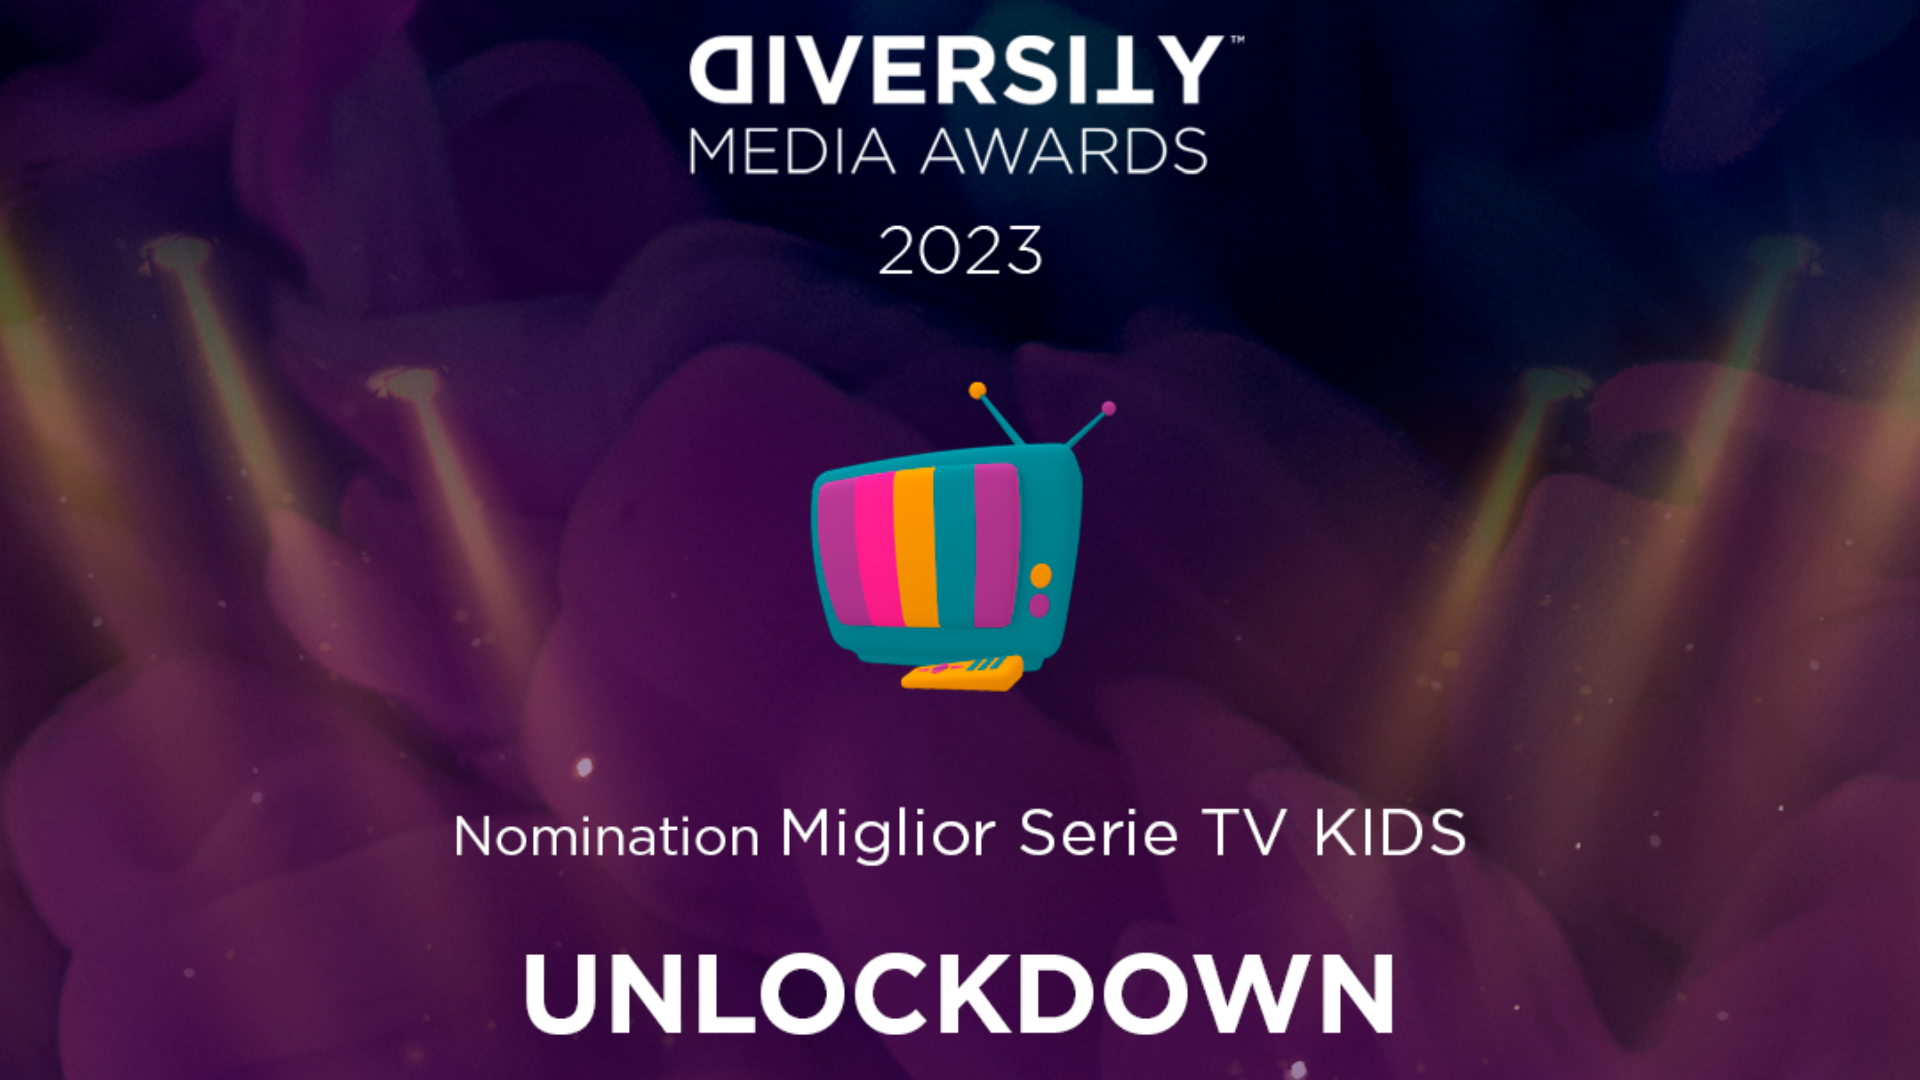 "Unlockdown" candidata ai Diversity Media Awards!